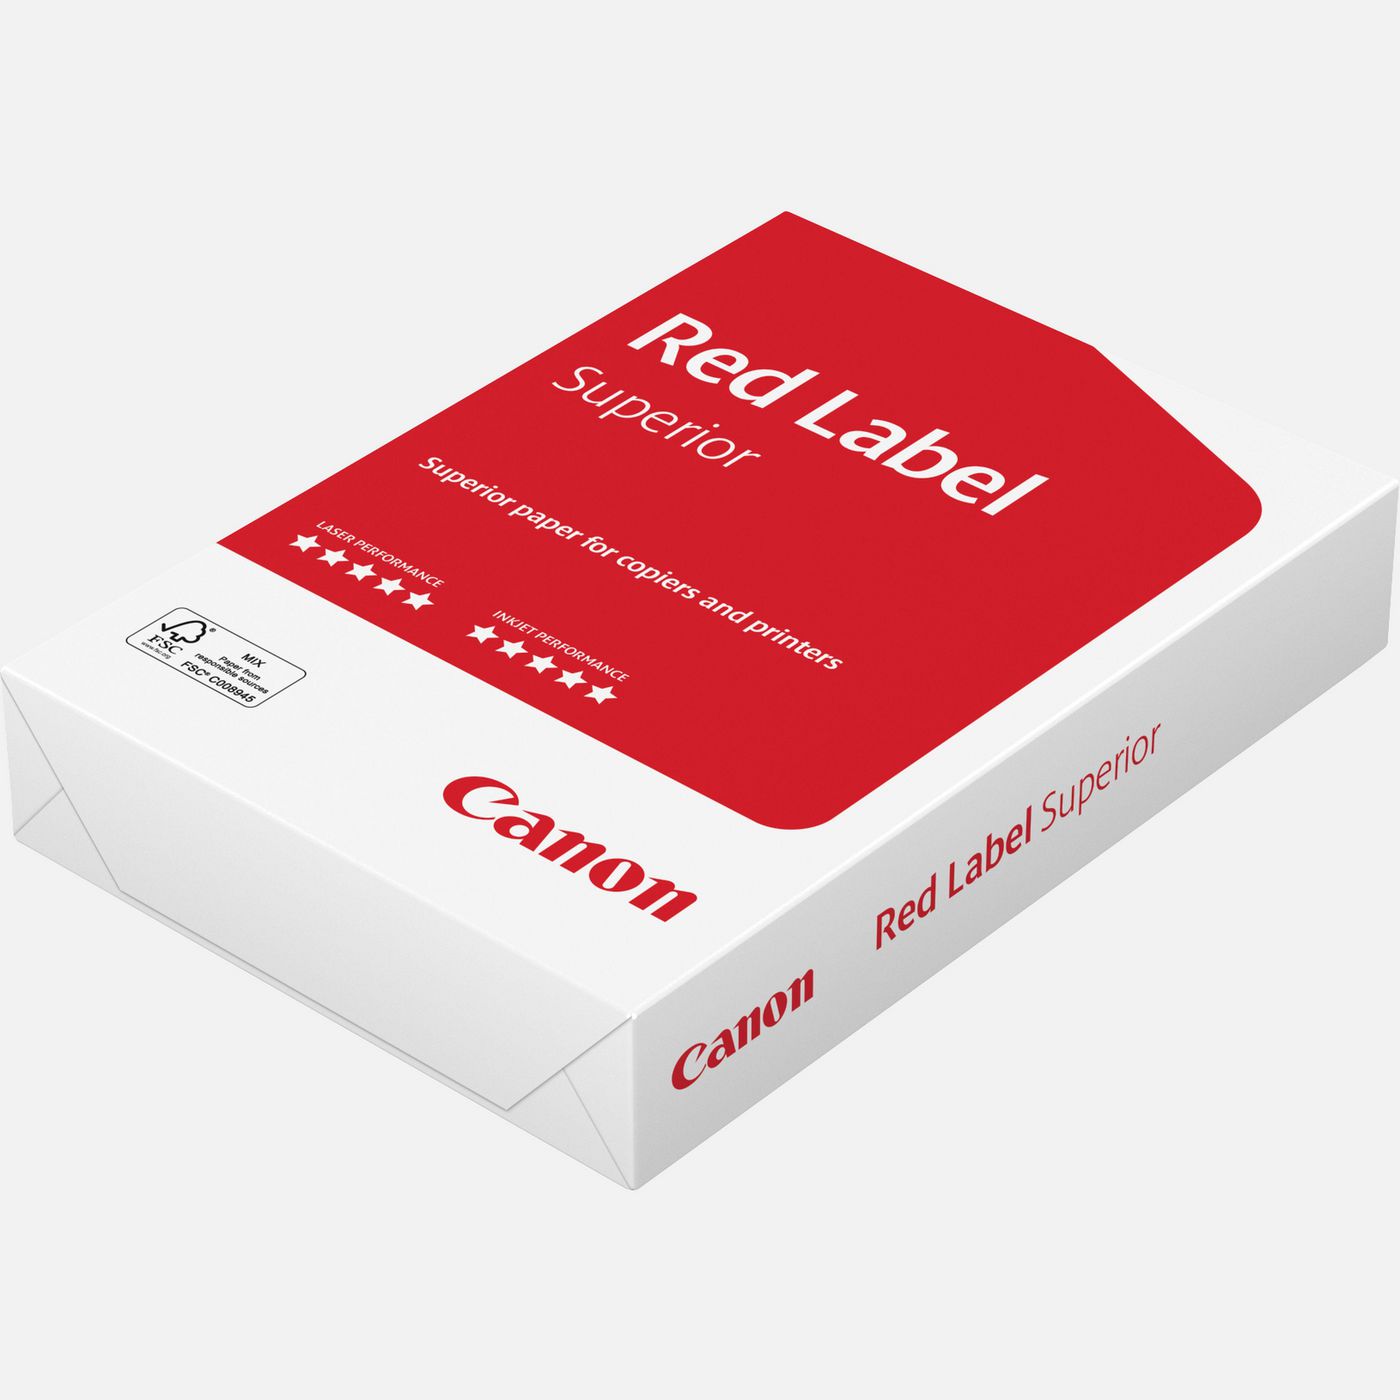 CANON Red Label Superior Papier A4 80g  5 x 500 Blatt